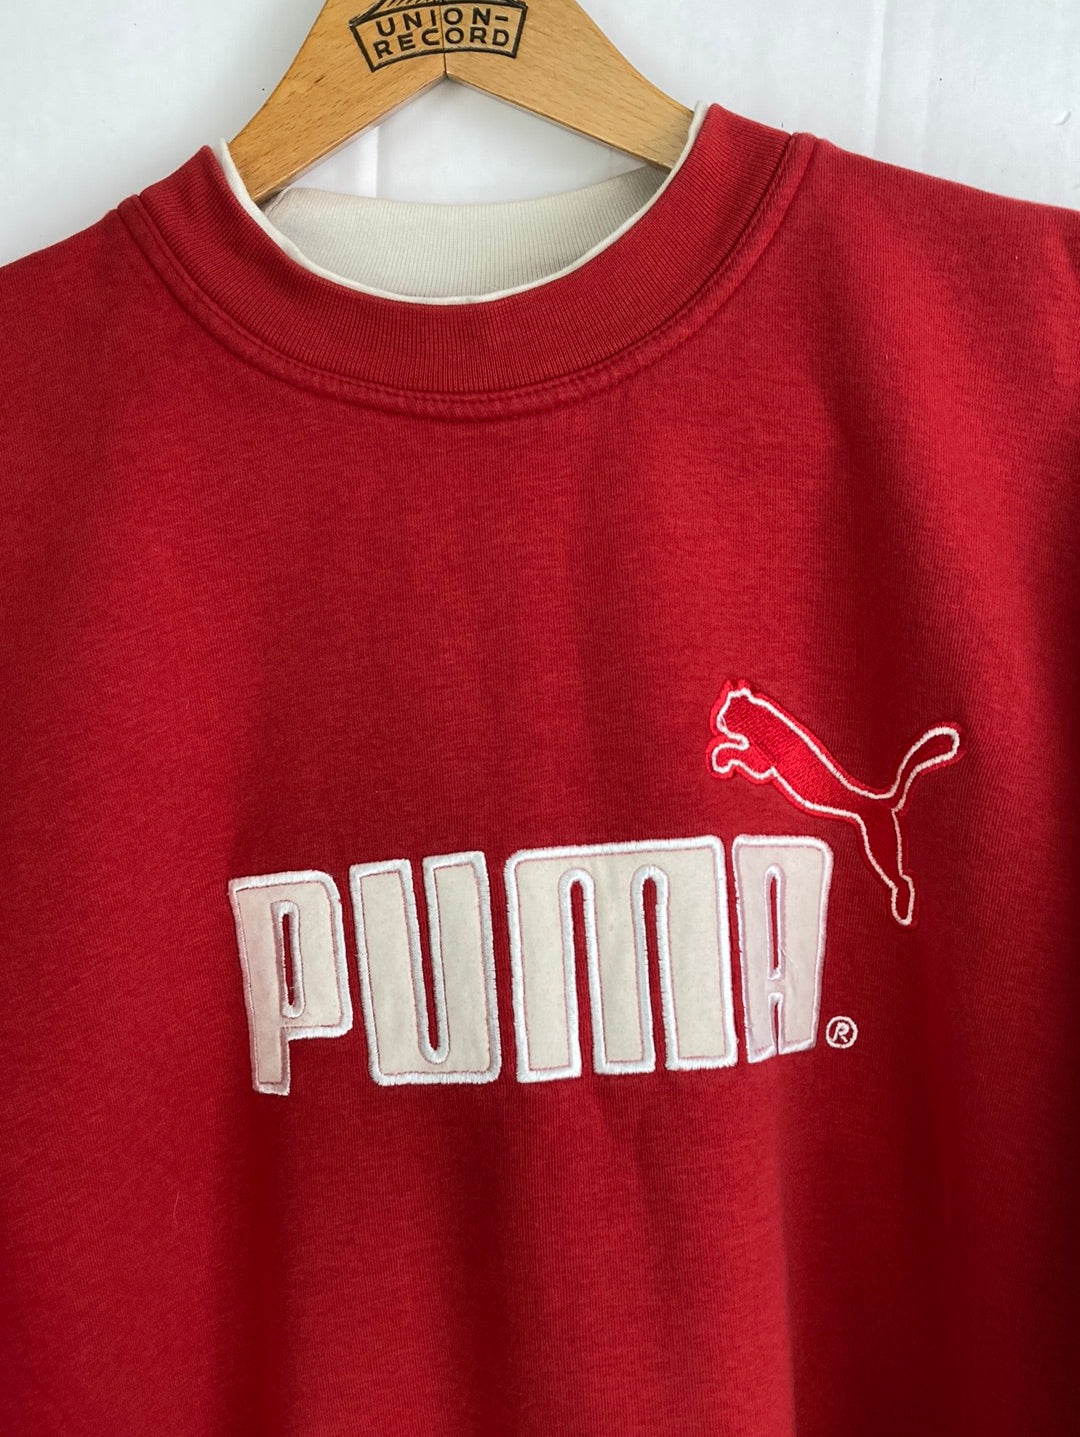 Puma Sweater (M)